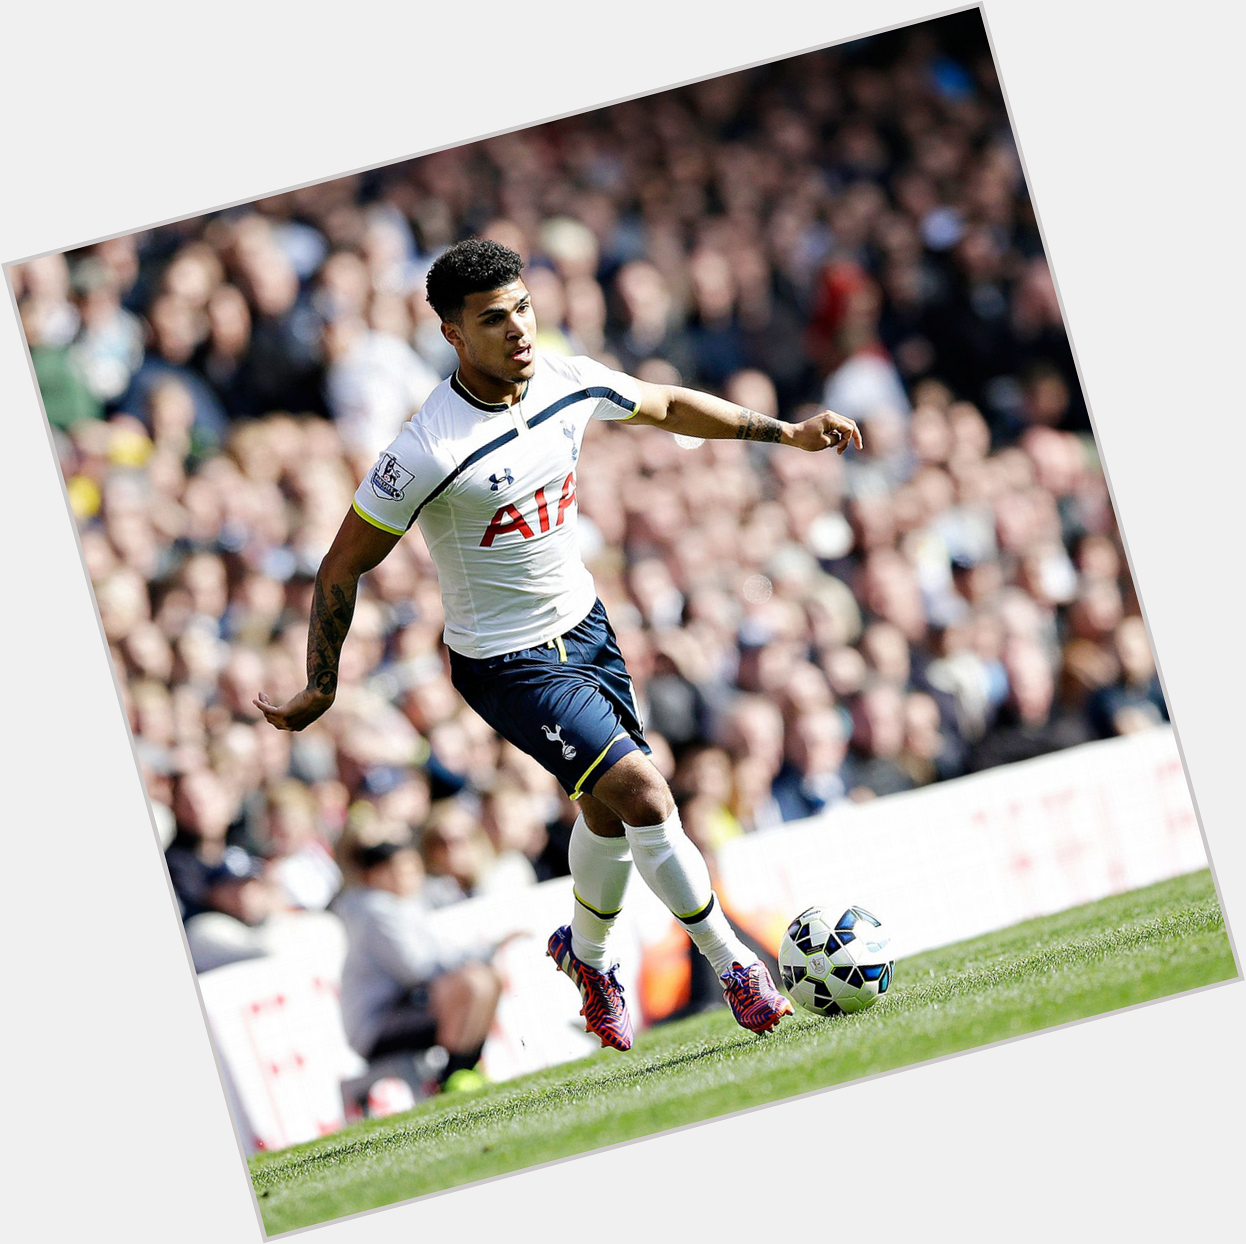 Happy Birthday, DeAndre Yedlin! The Tottenham Hotspur full-back turns 22 years-old today. 